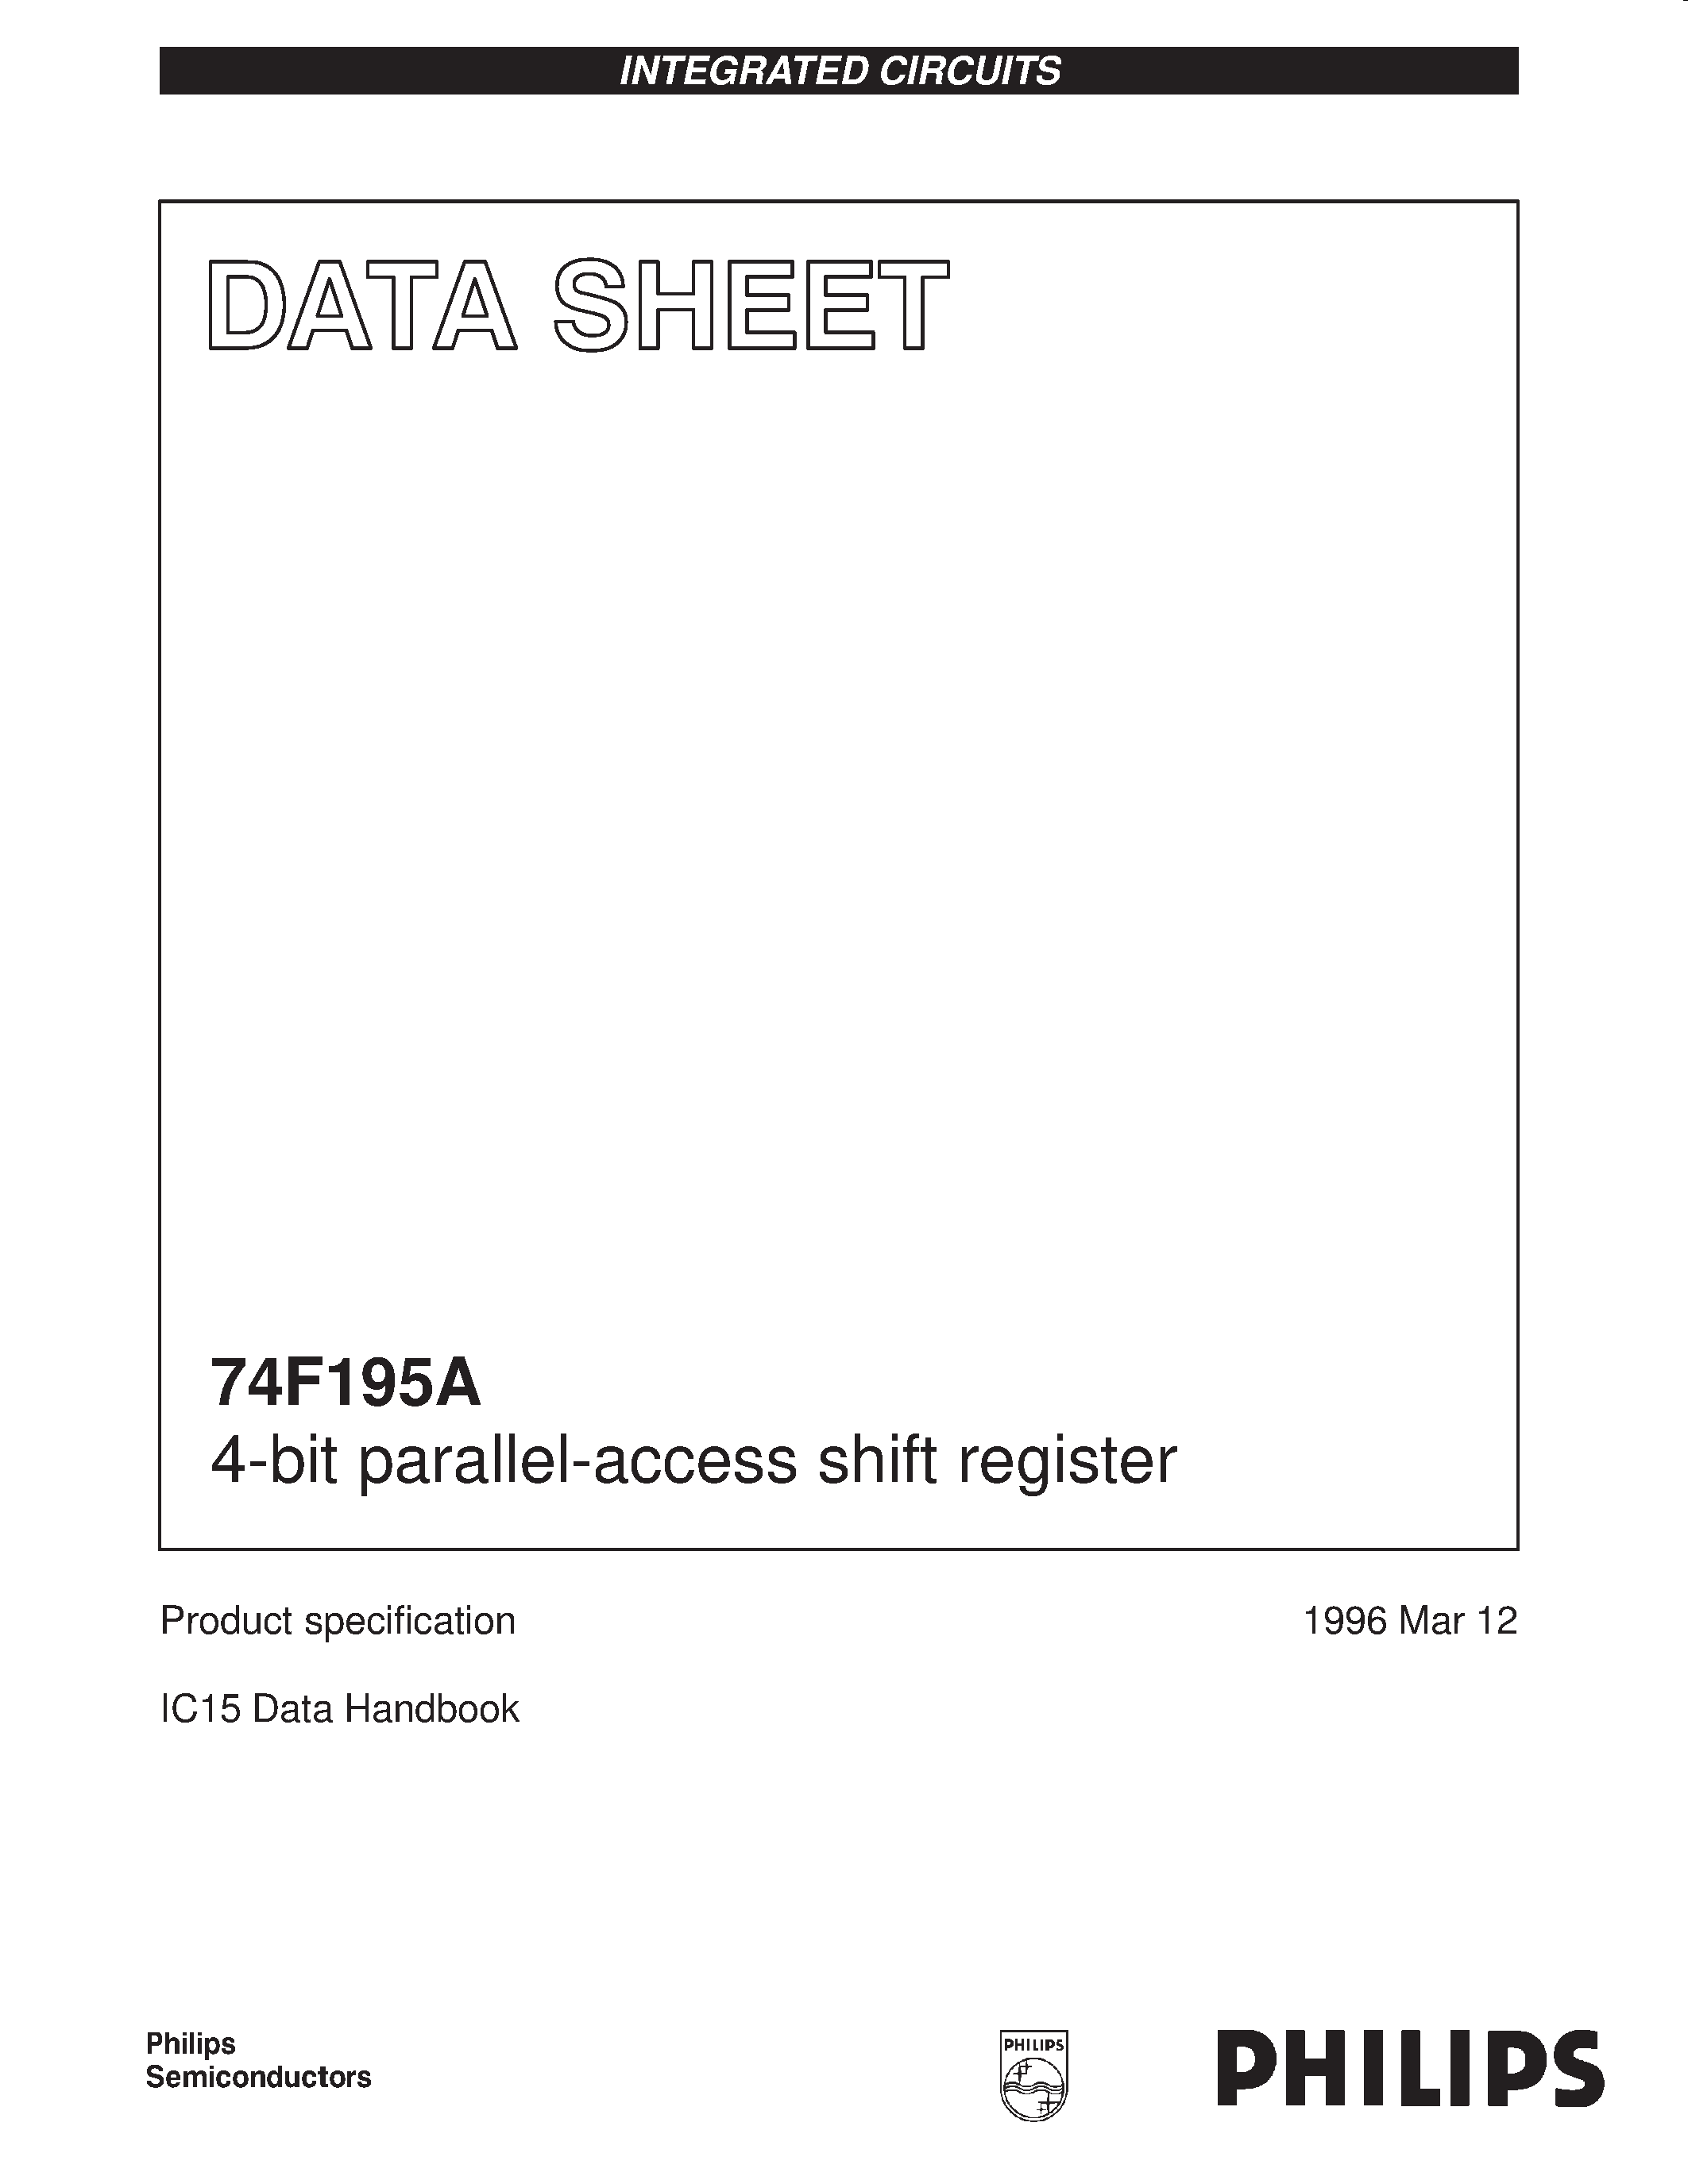 Даташит 74F195A - 4-bit parallel-access shift register страница 1